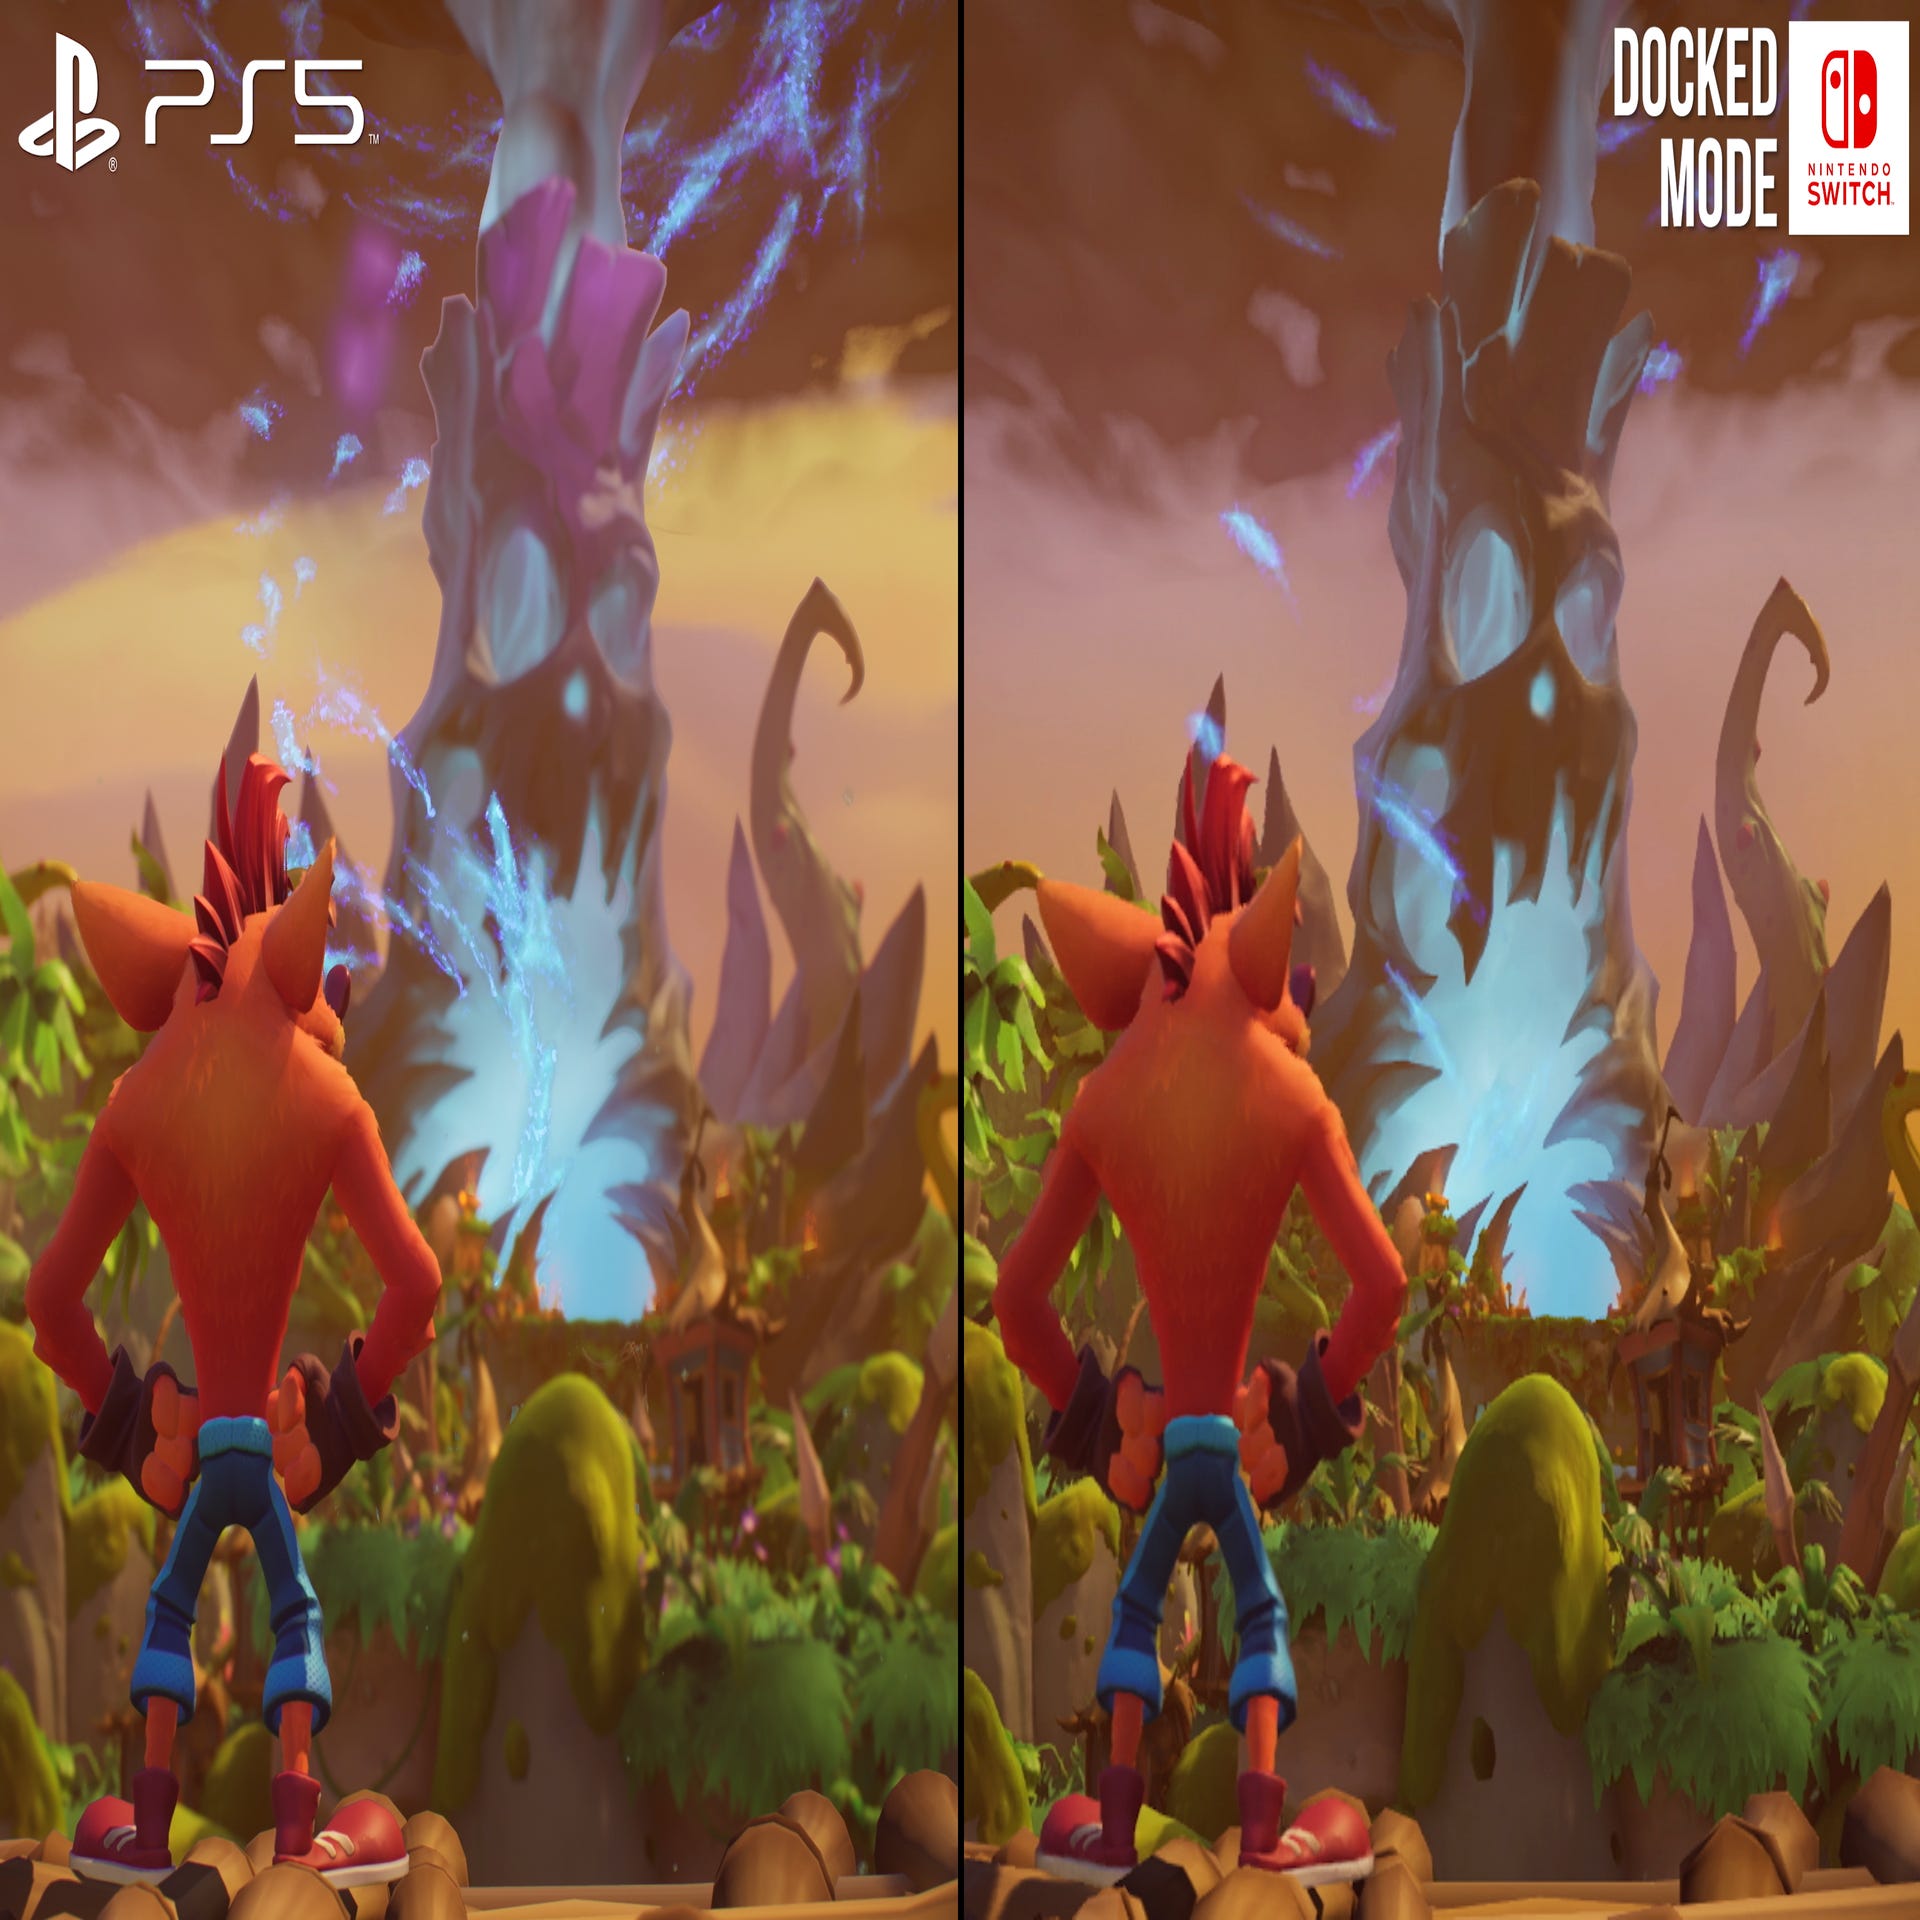 Crash Bandicoot 4 revisted: PlayStation 5 vs Nintendo Switch